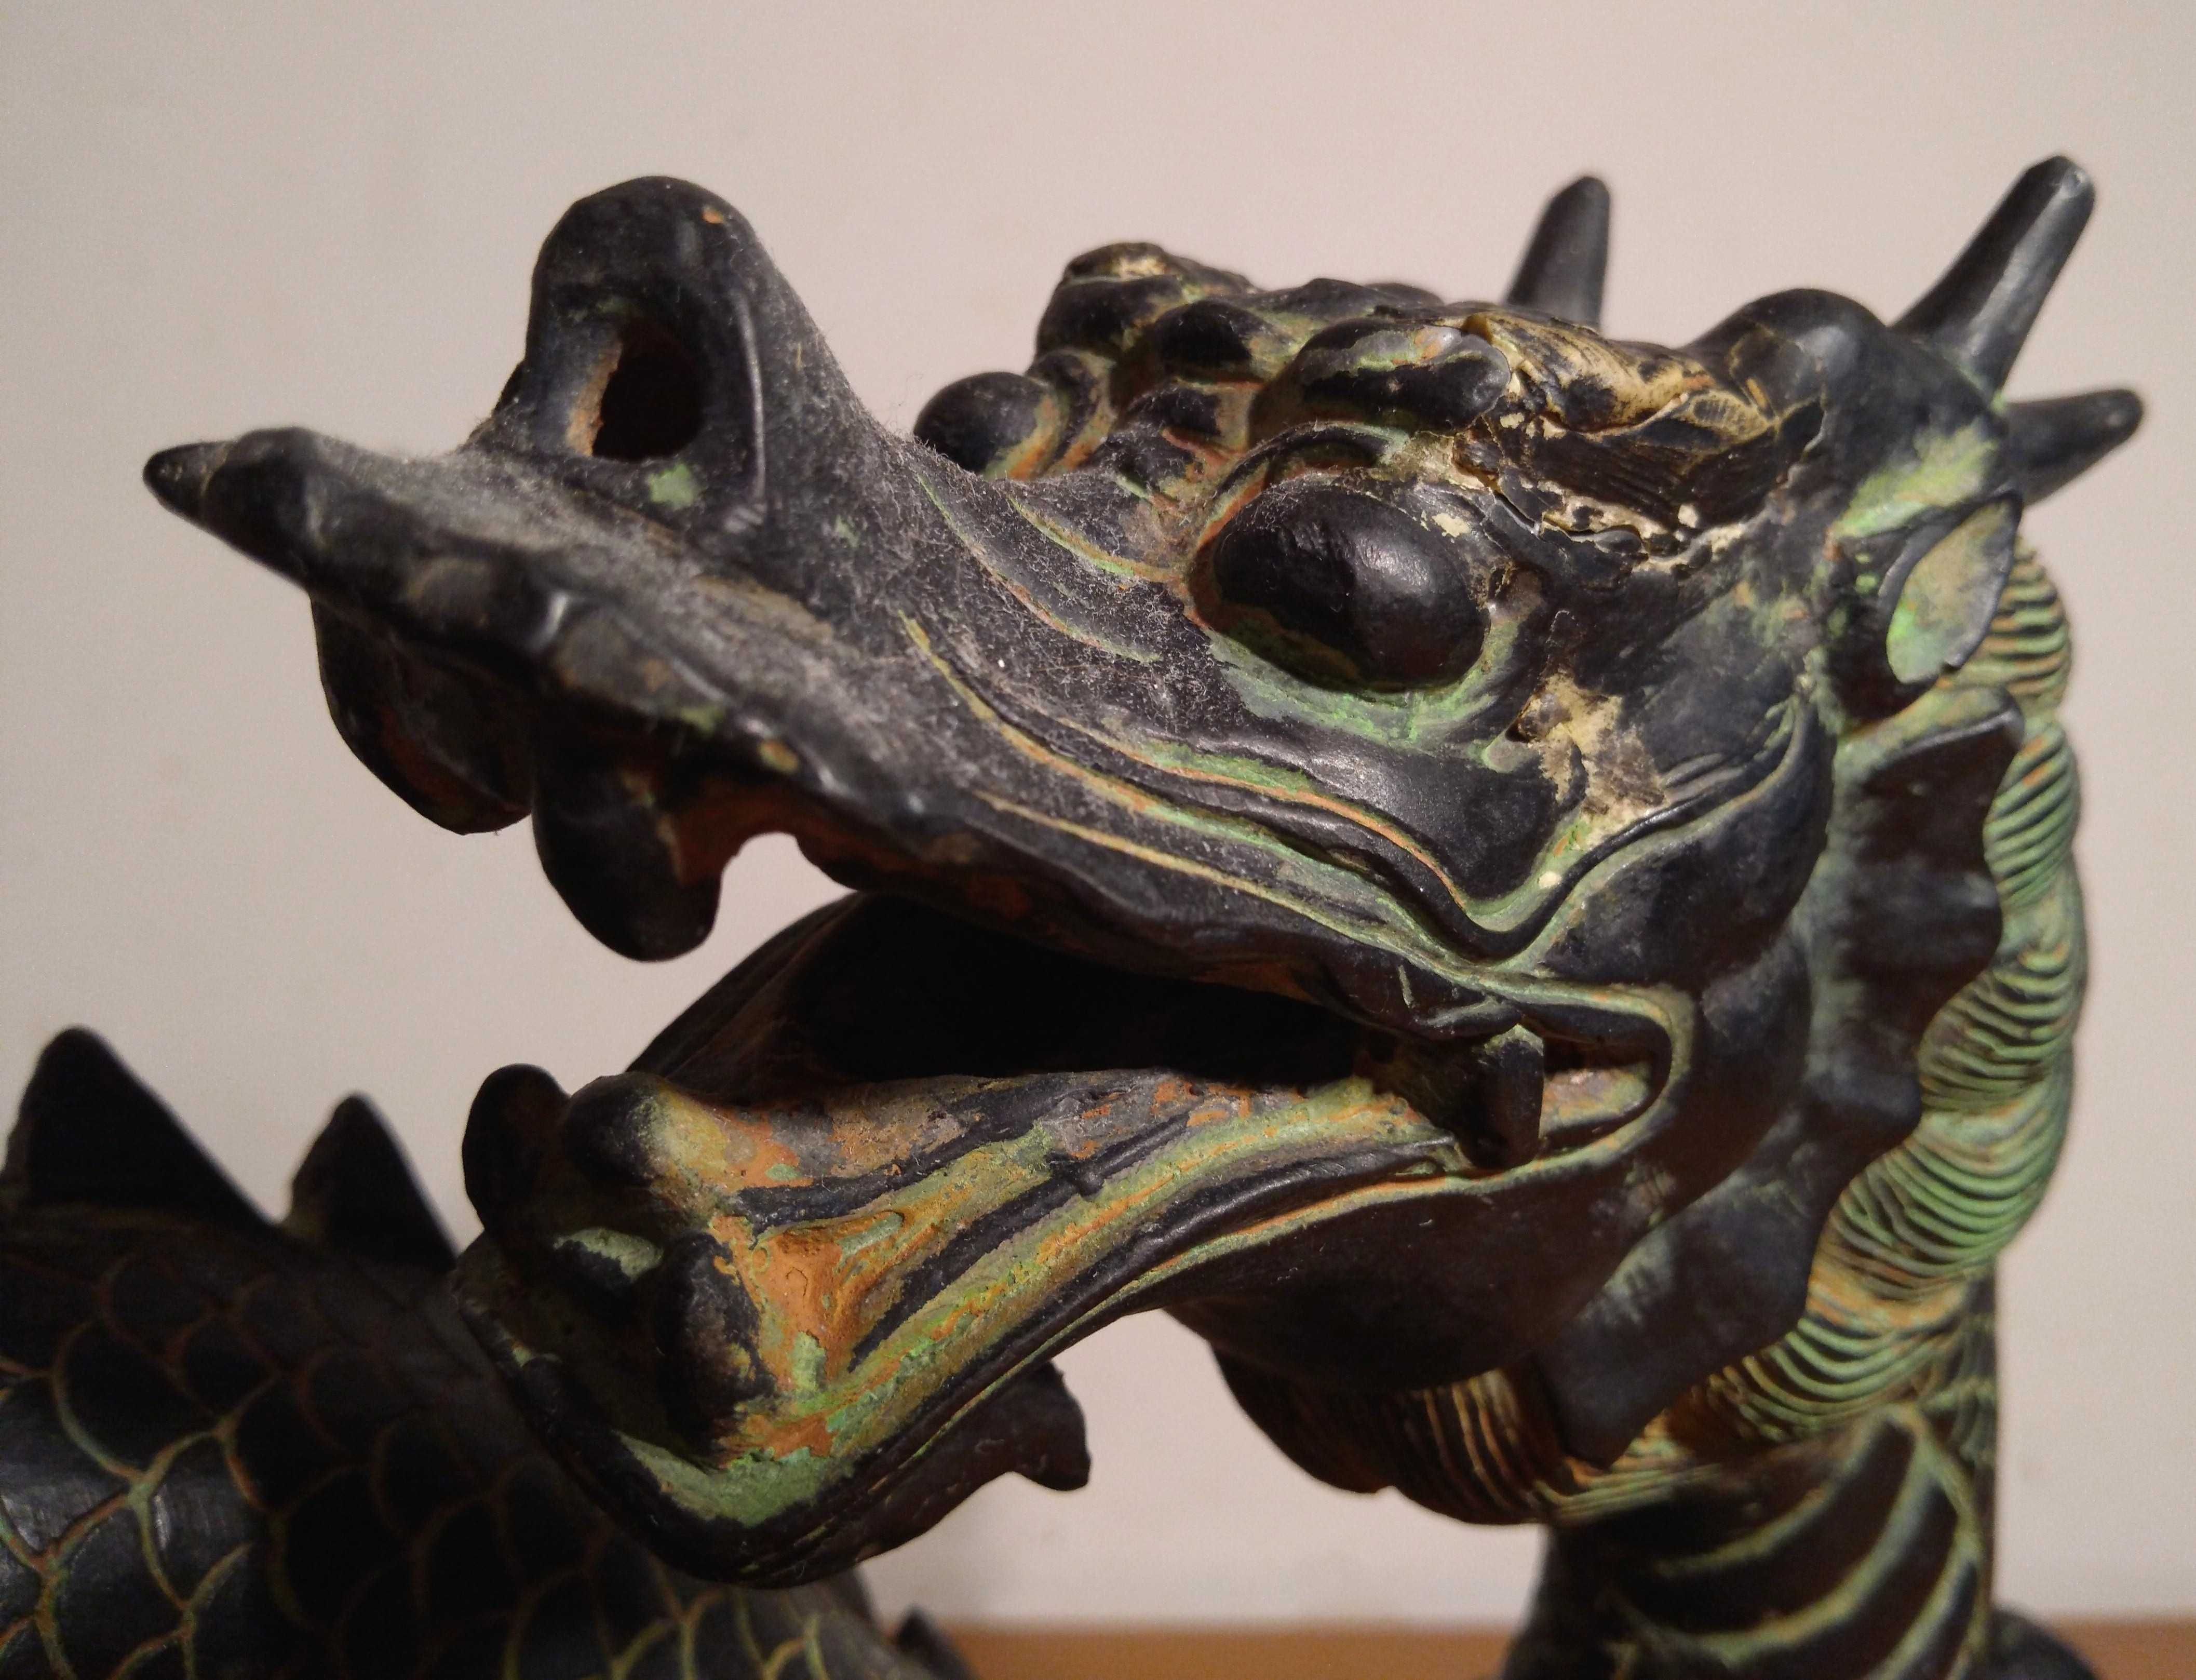 Statueta asiatica Dragon Imperial Feng Shui |bronz| veche si rara